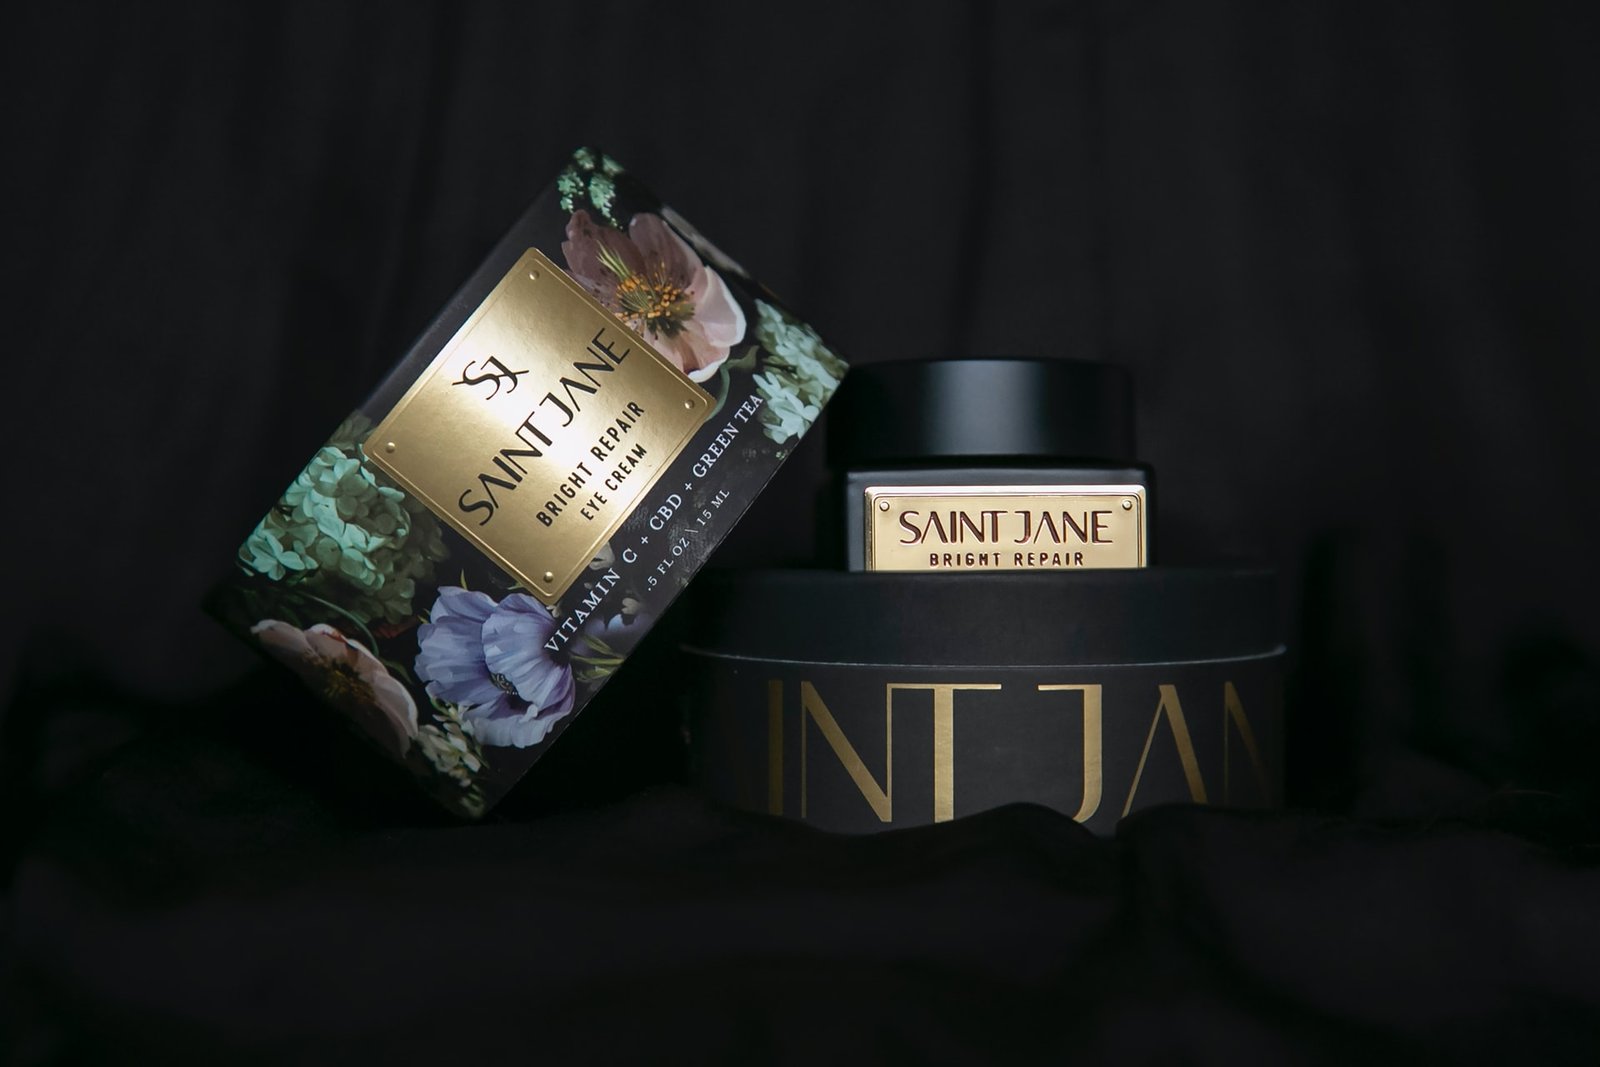 Saint Jane CBD eye cream on black background